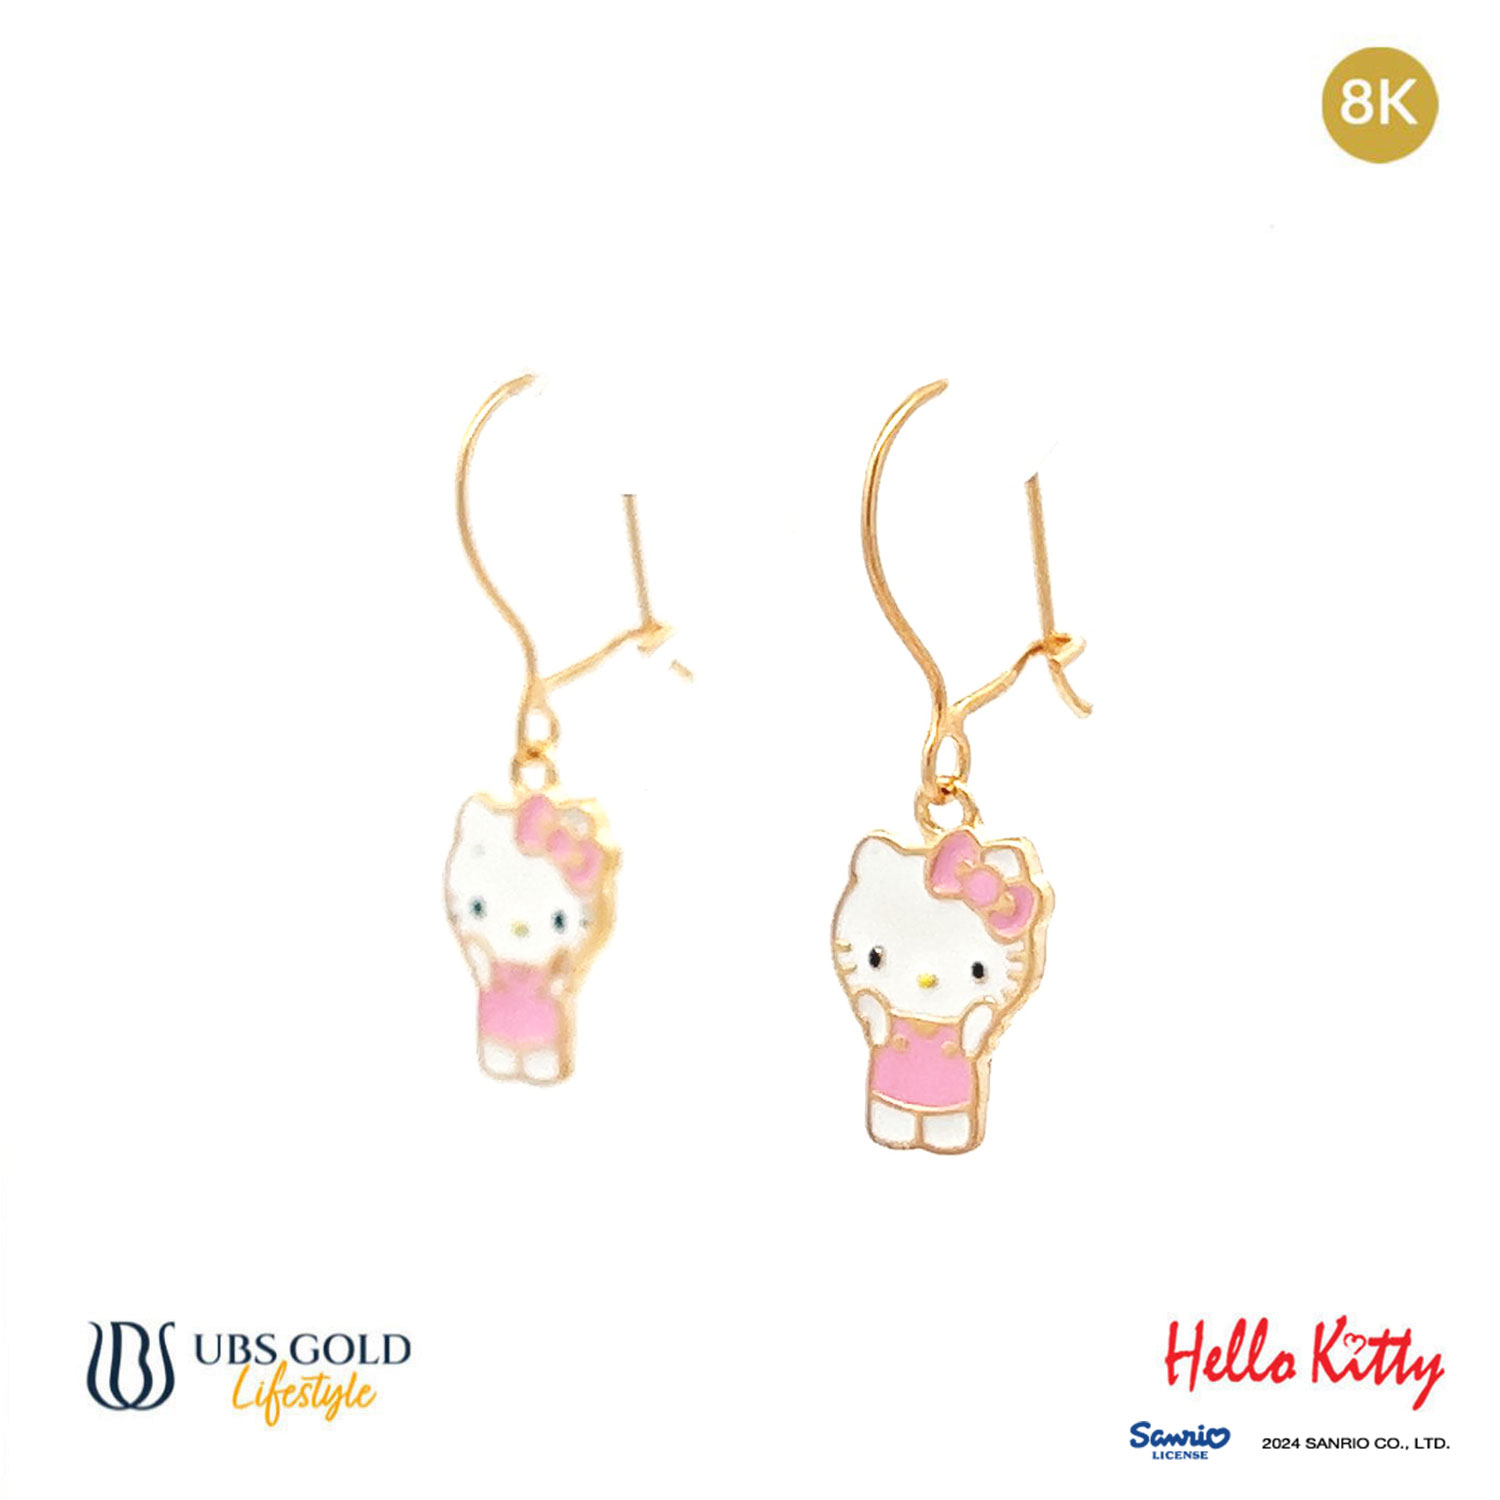 UBS Gold Anting Emas Anak Sanrio Hello Kitty - Aaz0027K - 8K